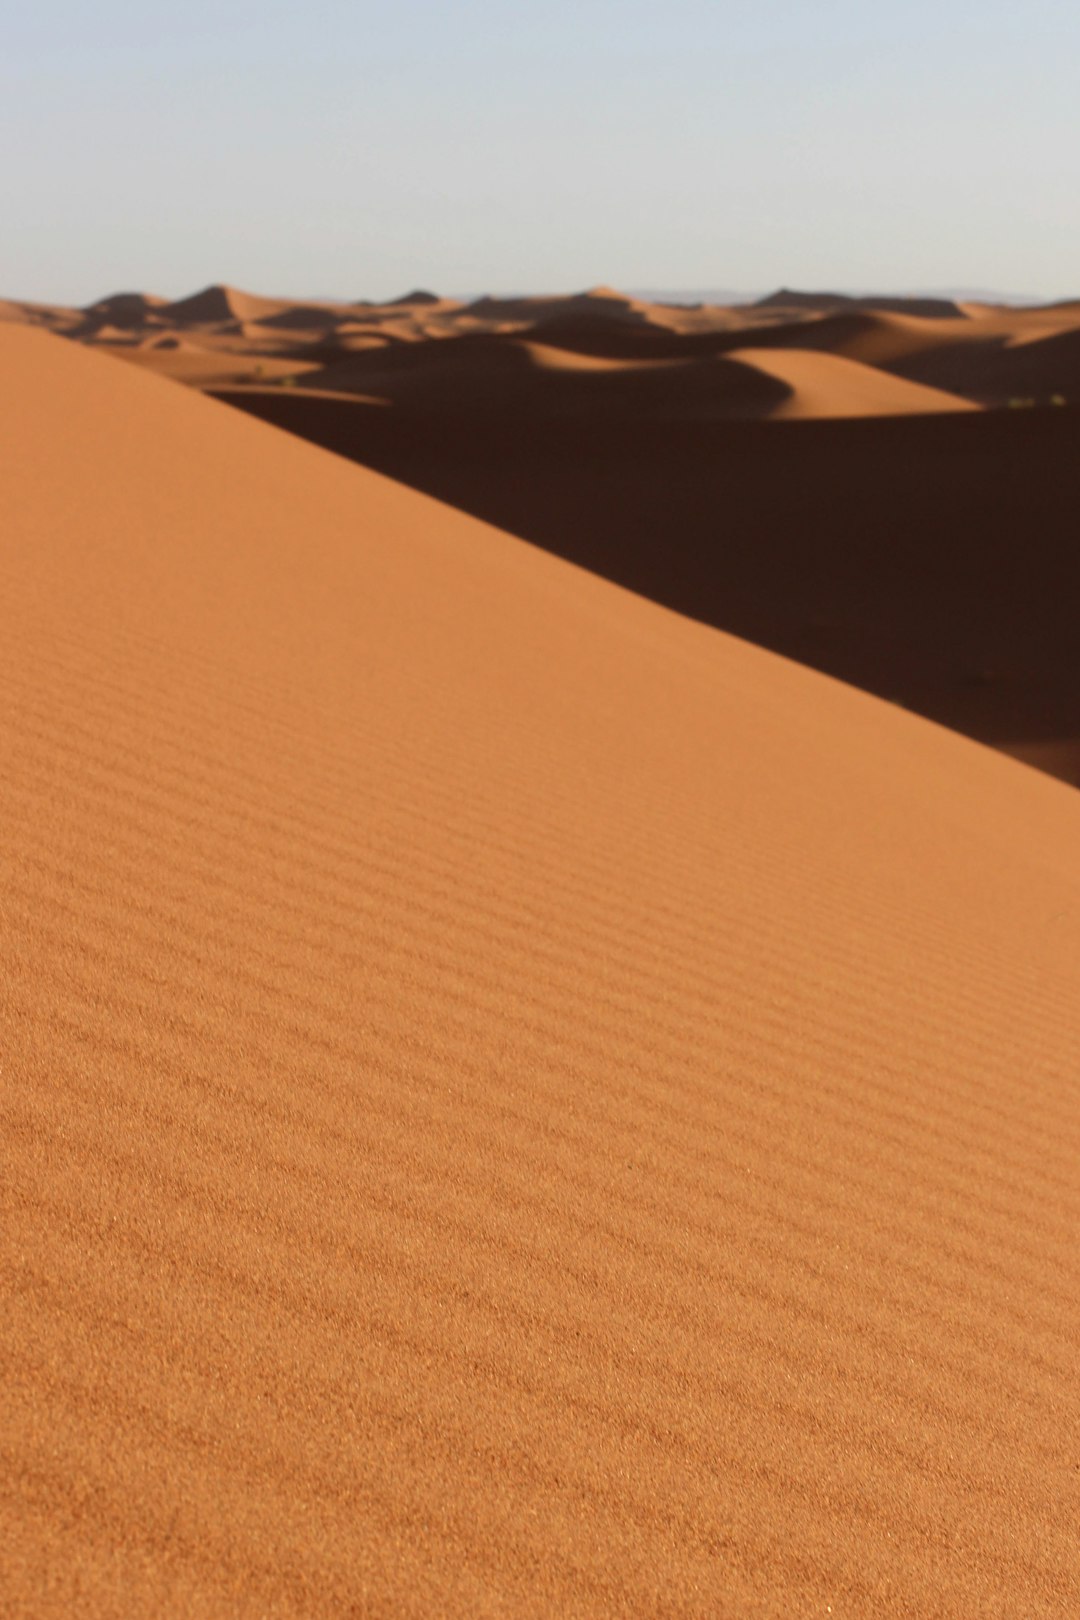 travelers stories about Desert in Erg Chegaga, Morocco